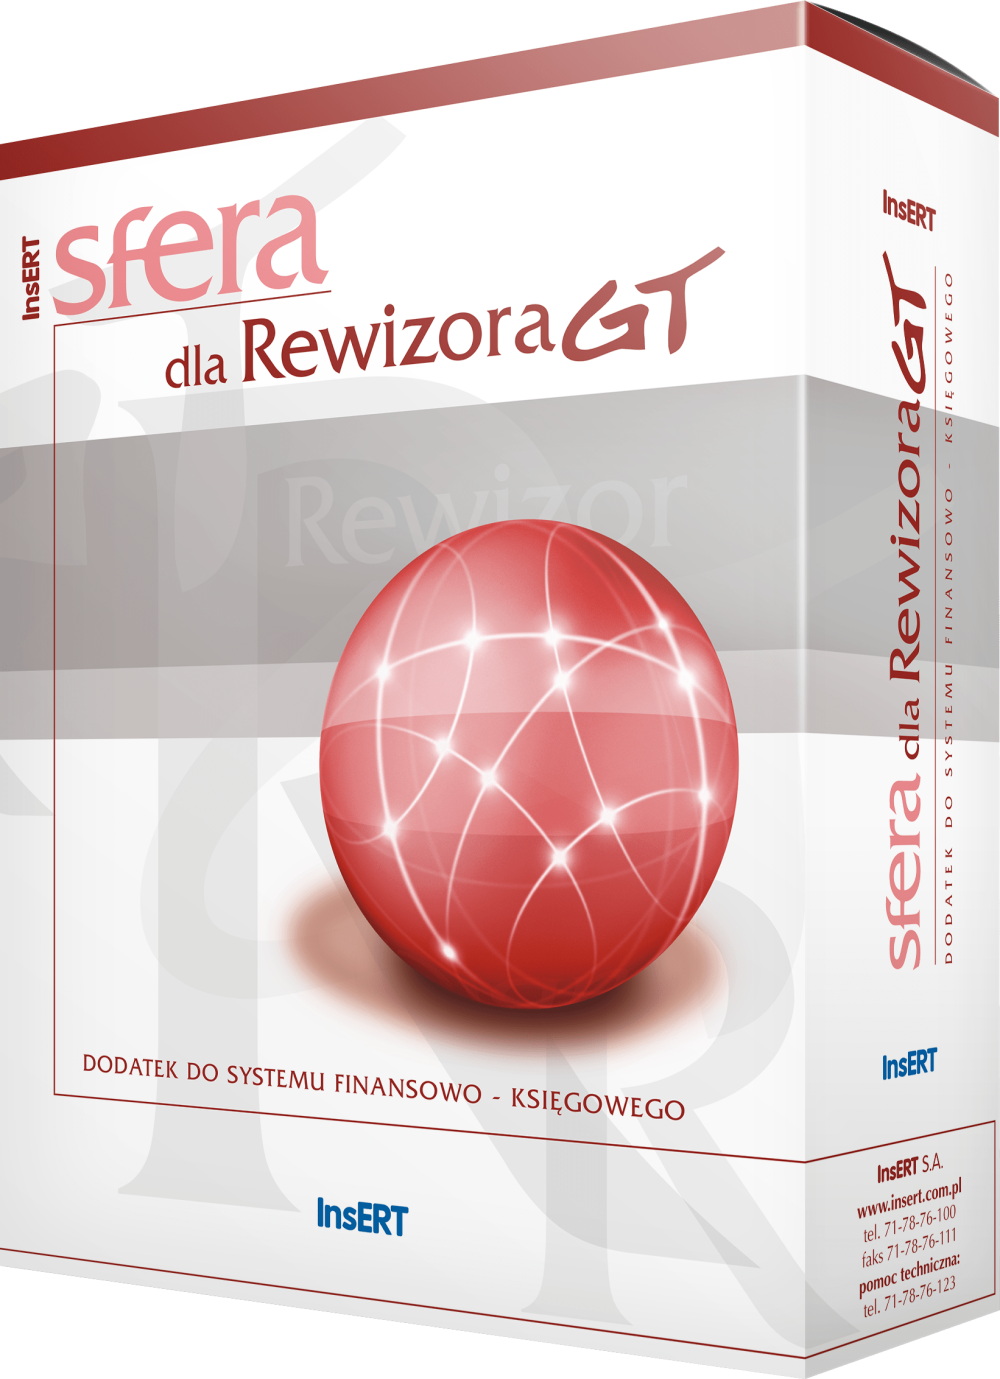 Sfera_dla_Rewizora_GT_pudelko_dsgsoftware